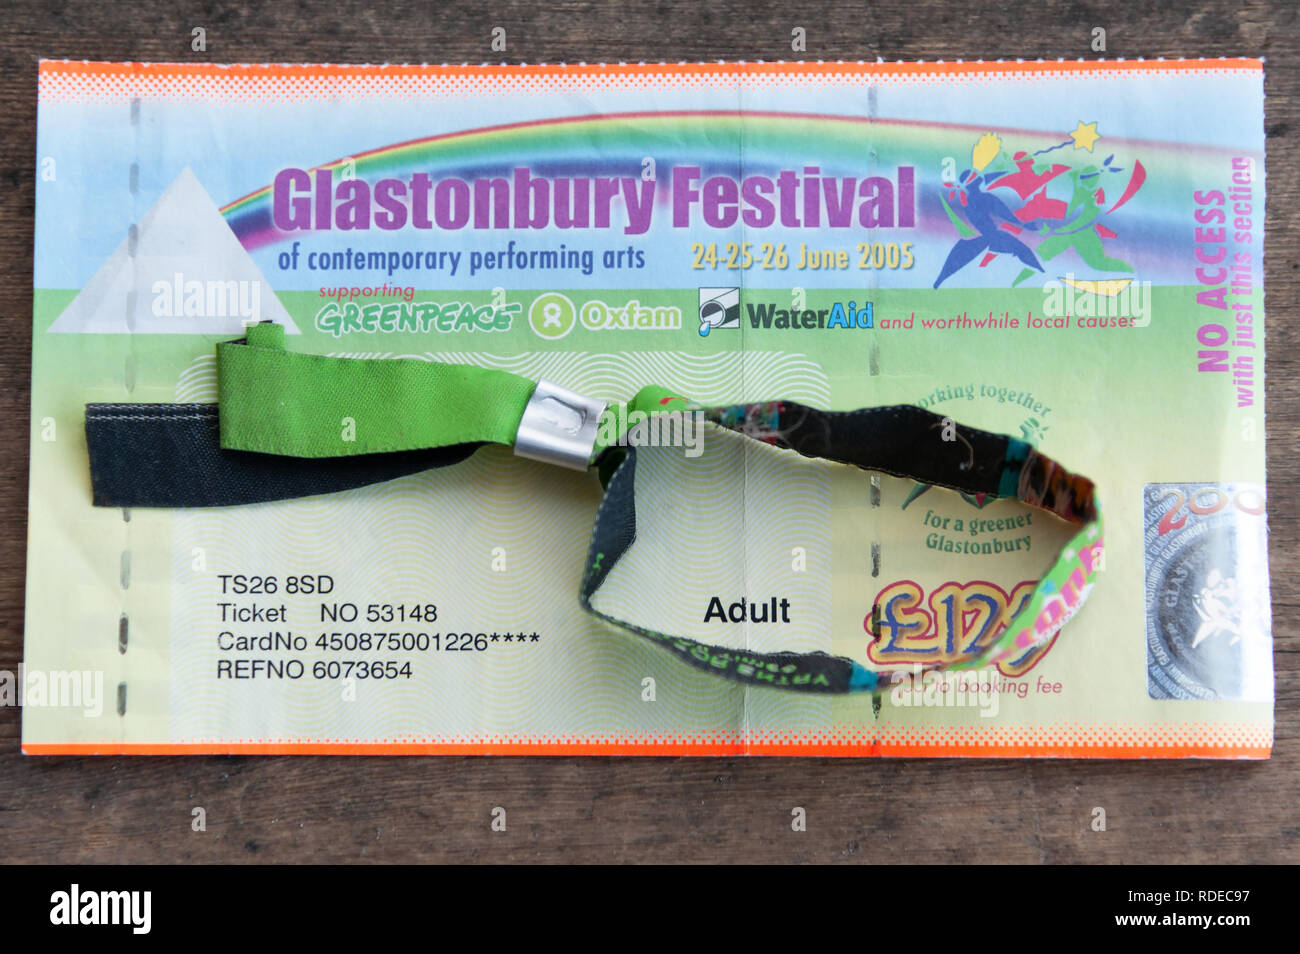 Used Glastonbury ticket and wrist band from Glastonbury Festival 2005. Stock Photo